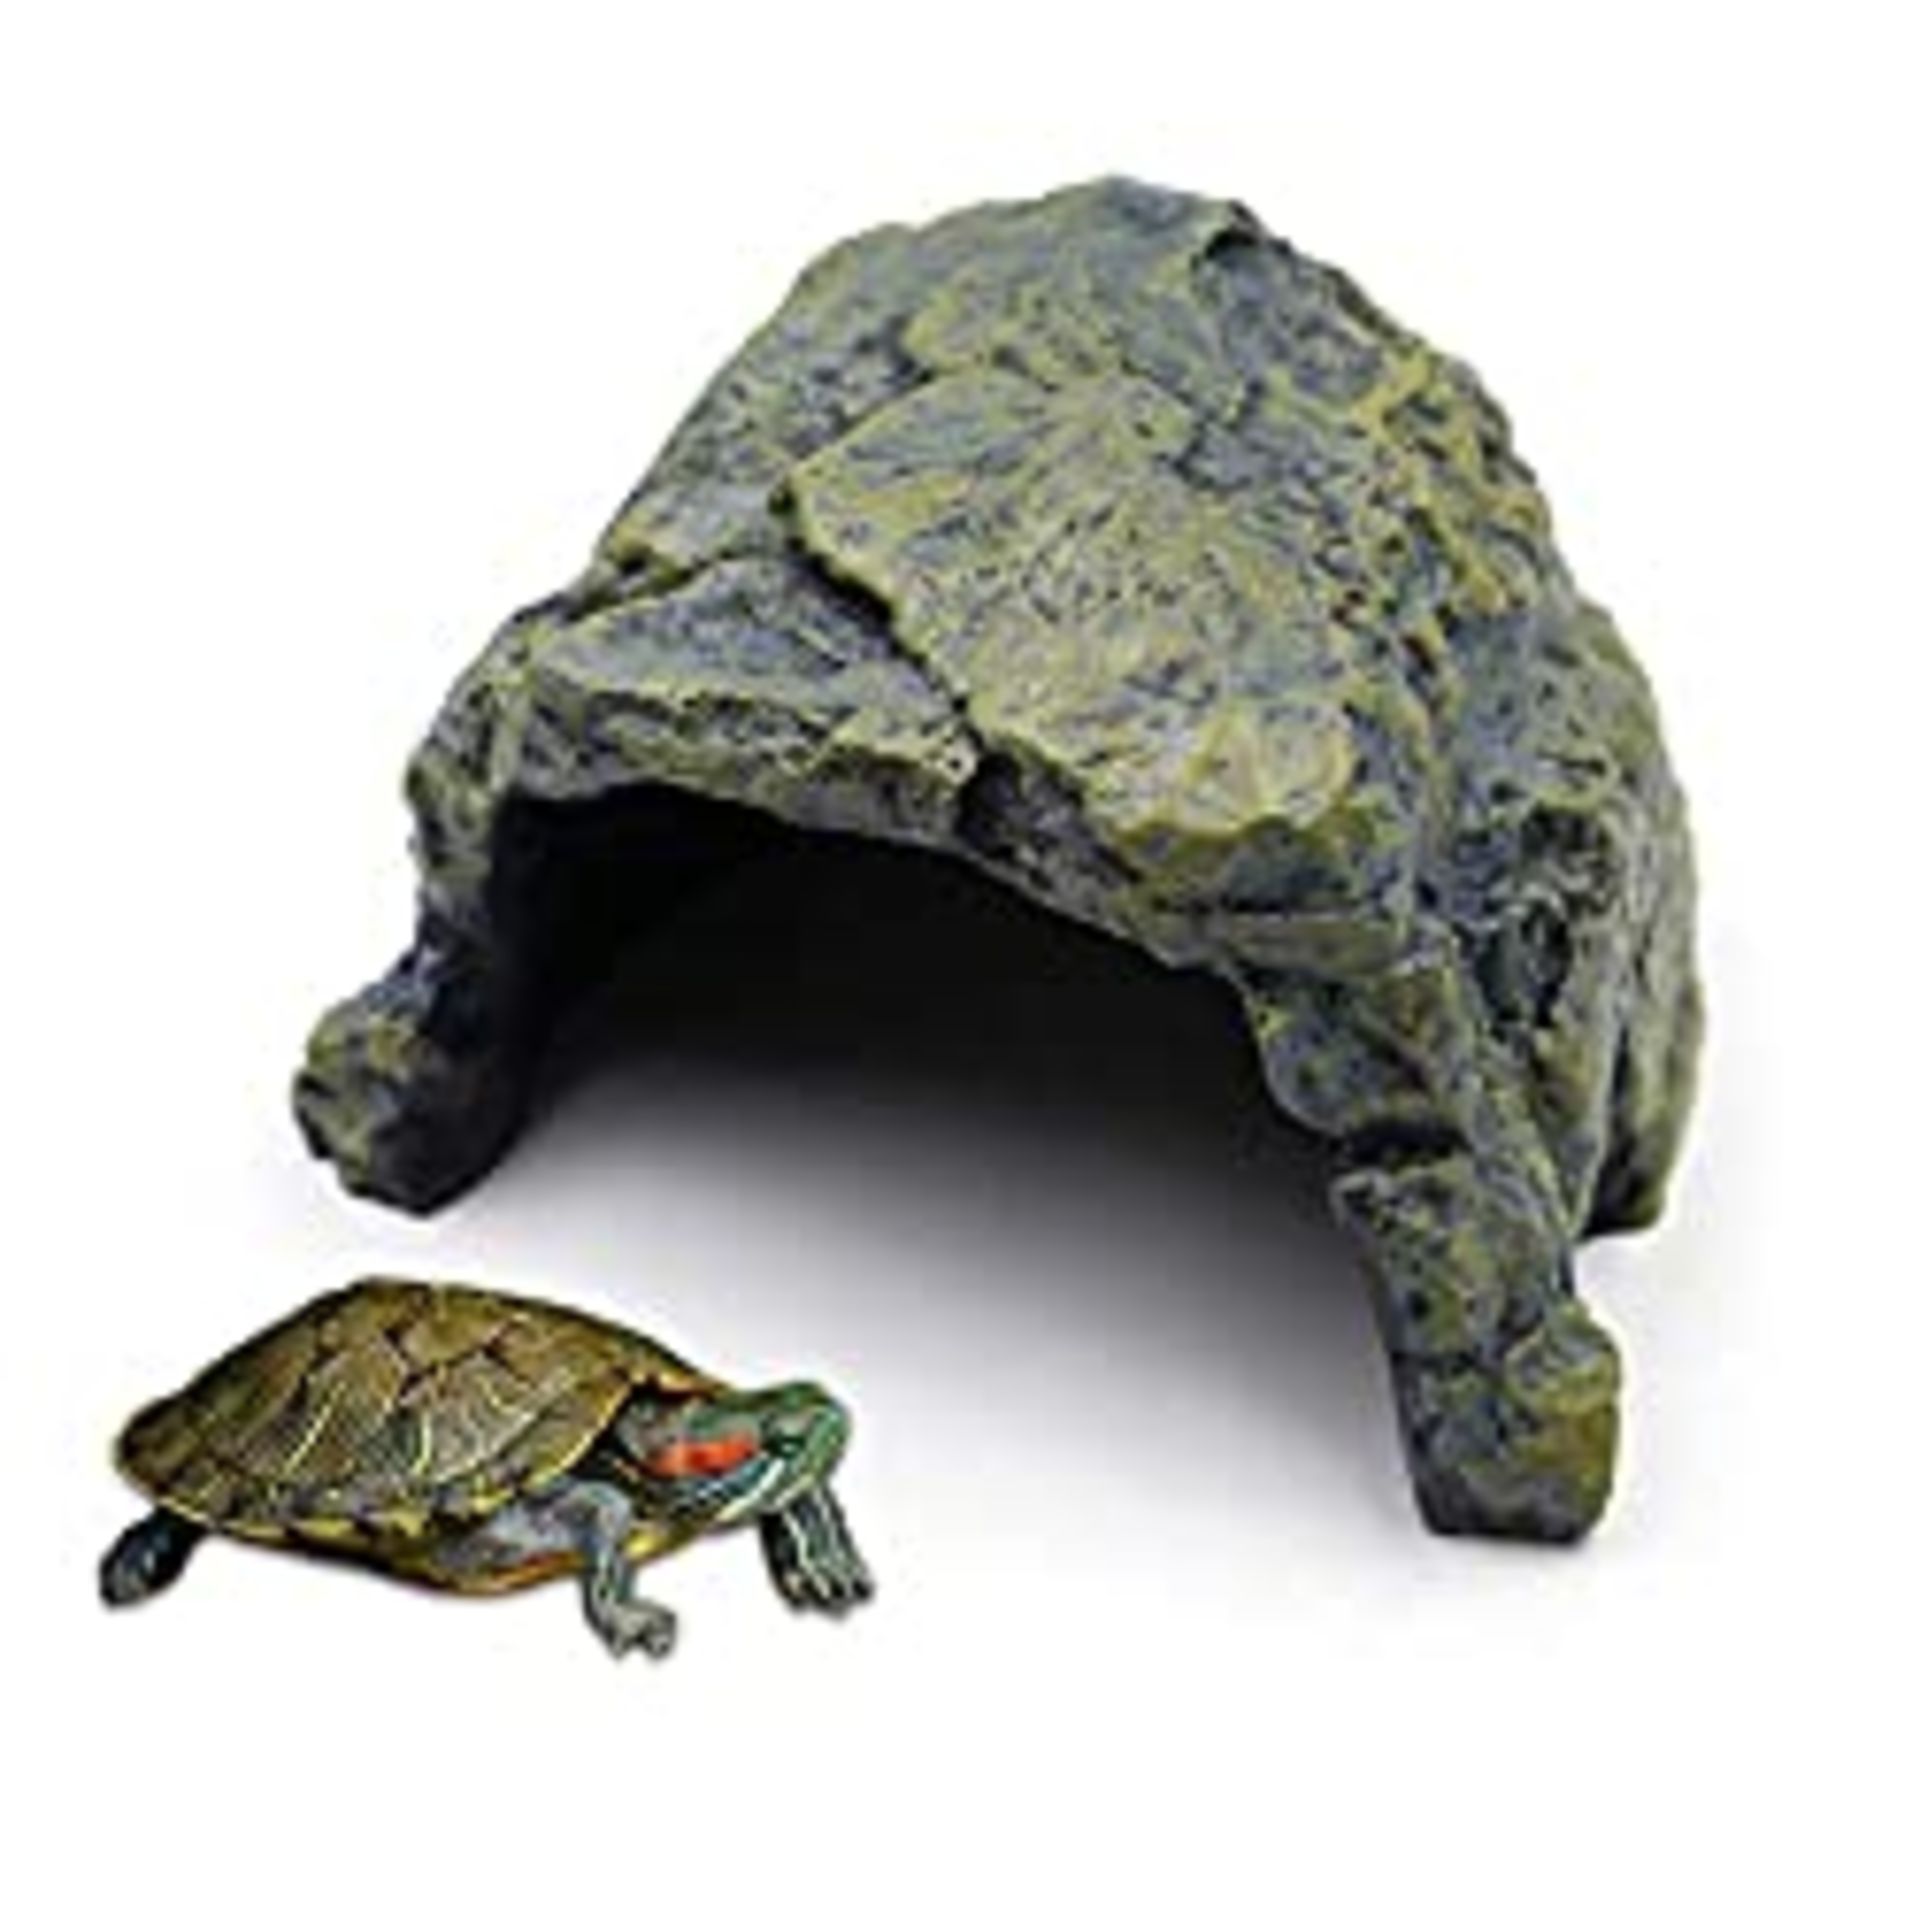 RRP £25.91 Svauoumu Reptile Hide Tortoise House Tortoise Cave